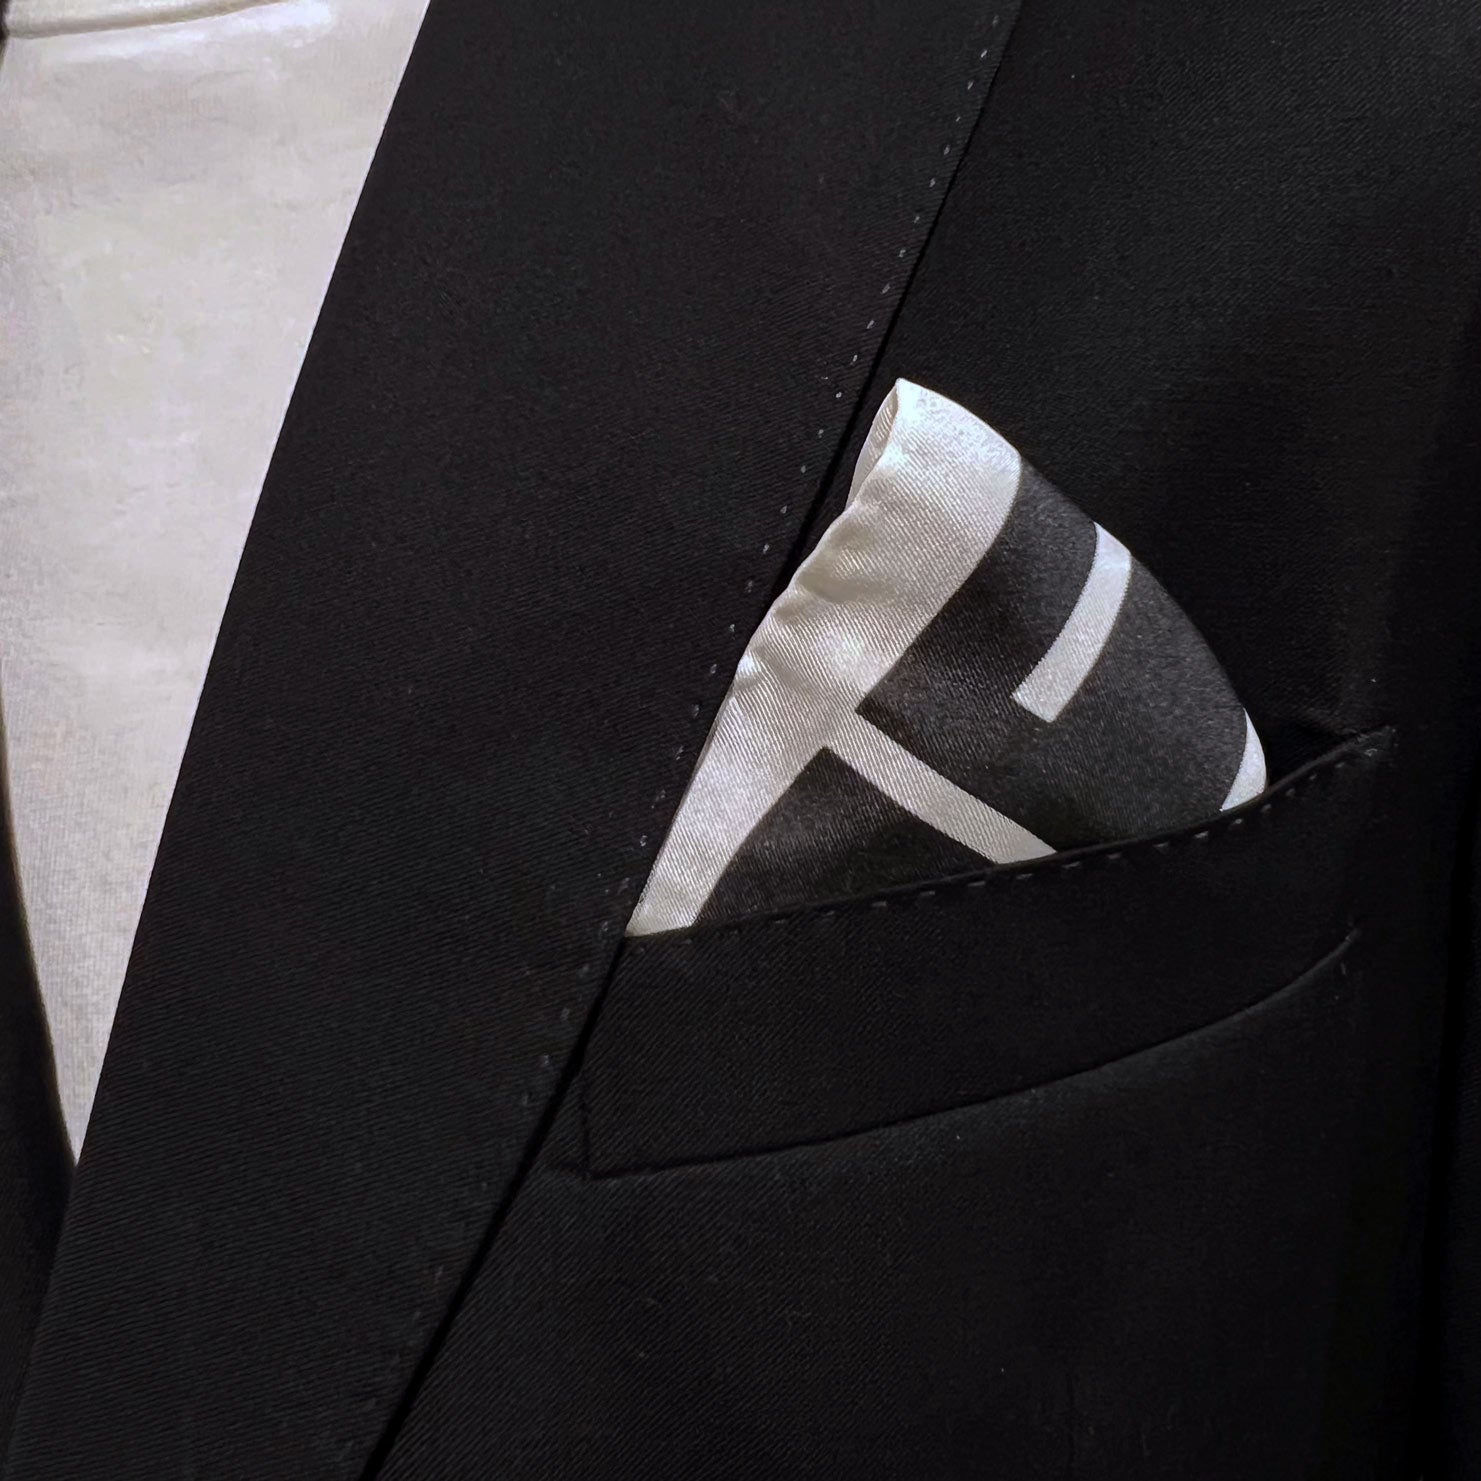 Close-up of striped 'Lloyd' silk pocket square in breast pocket of dark suit jacket.